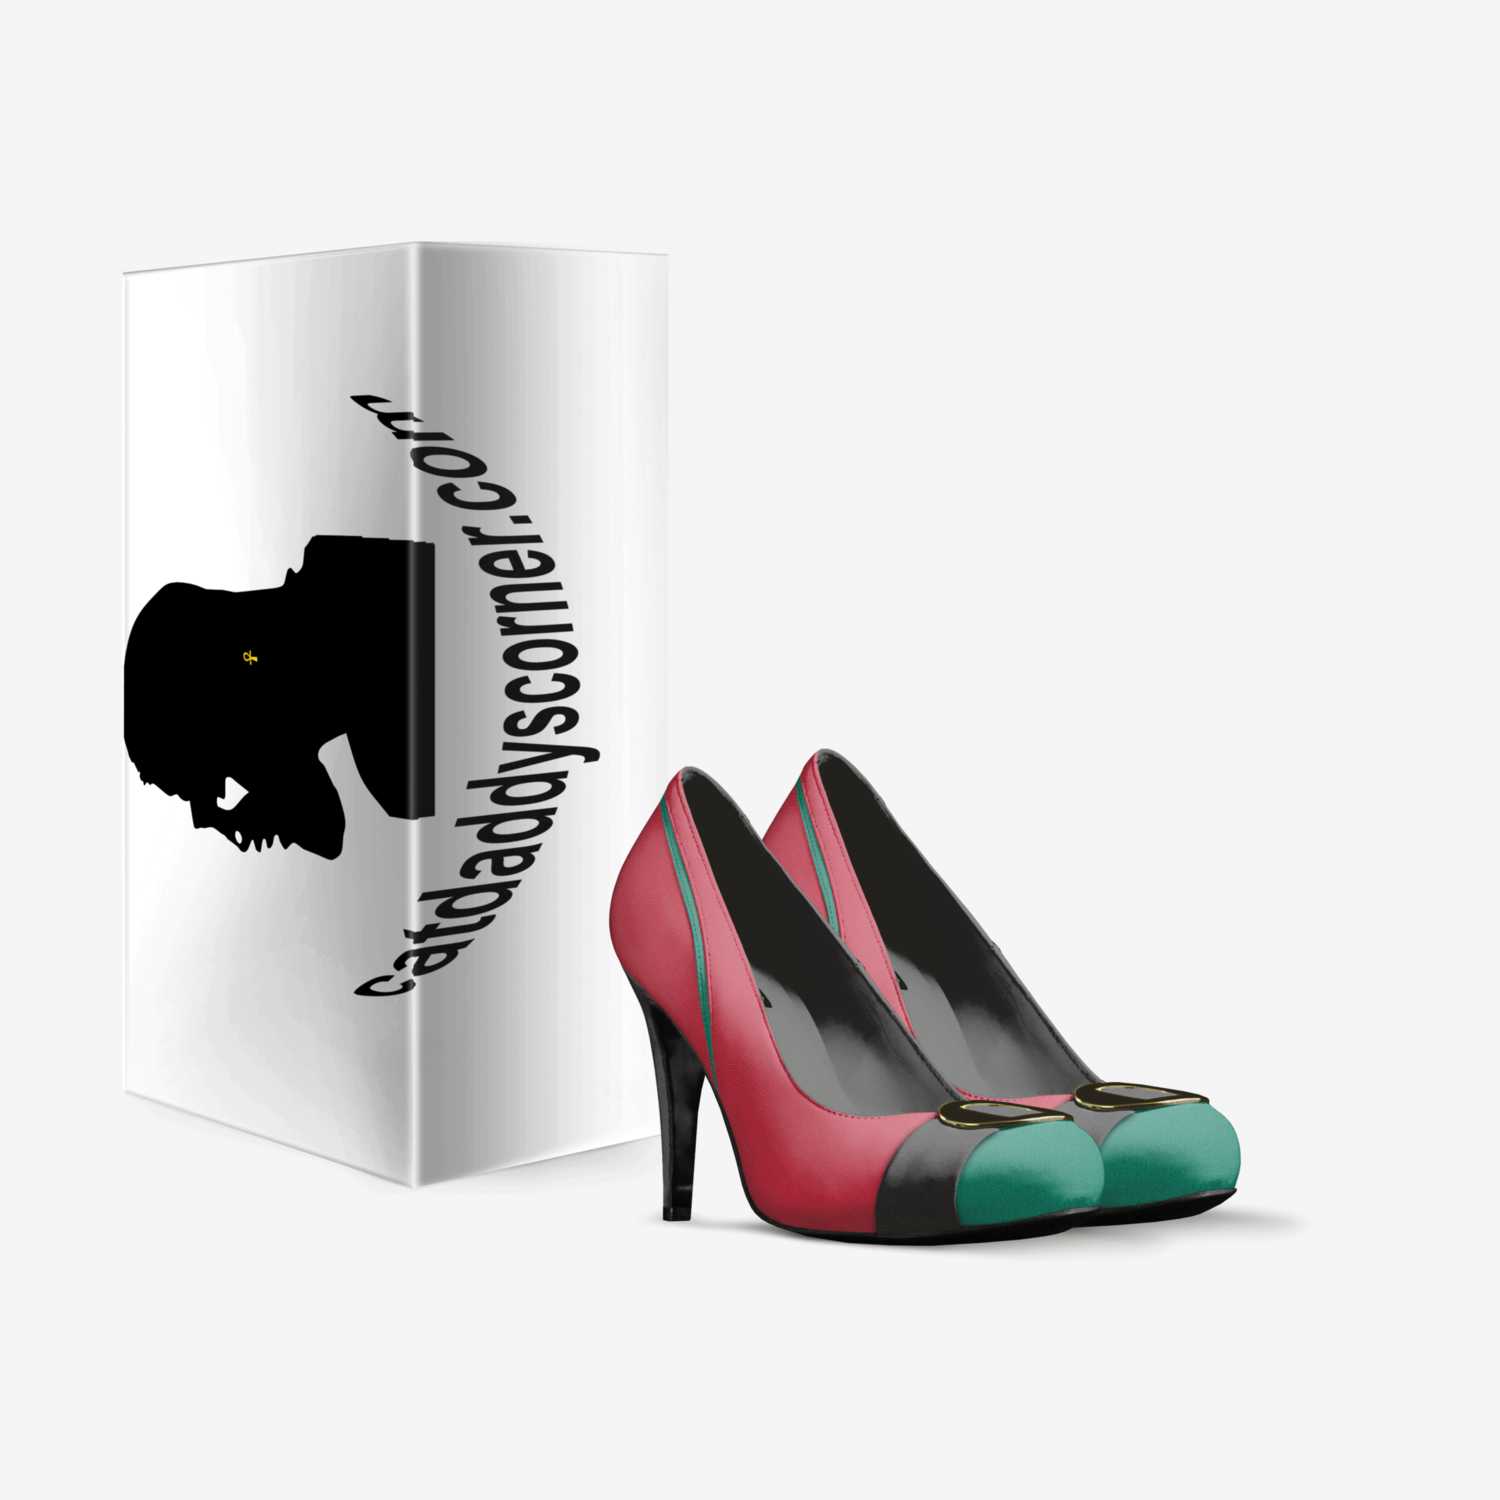 Nzuri custom made in Italy shoes by Scott Thomas | Box view